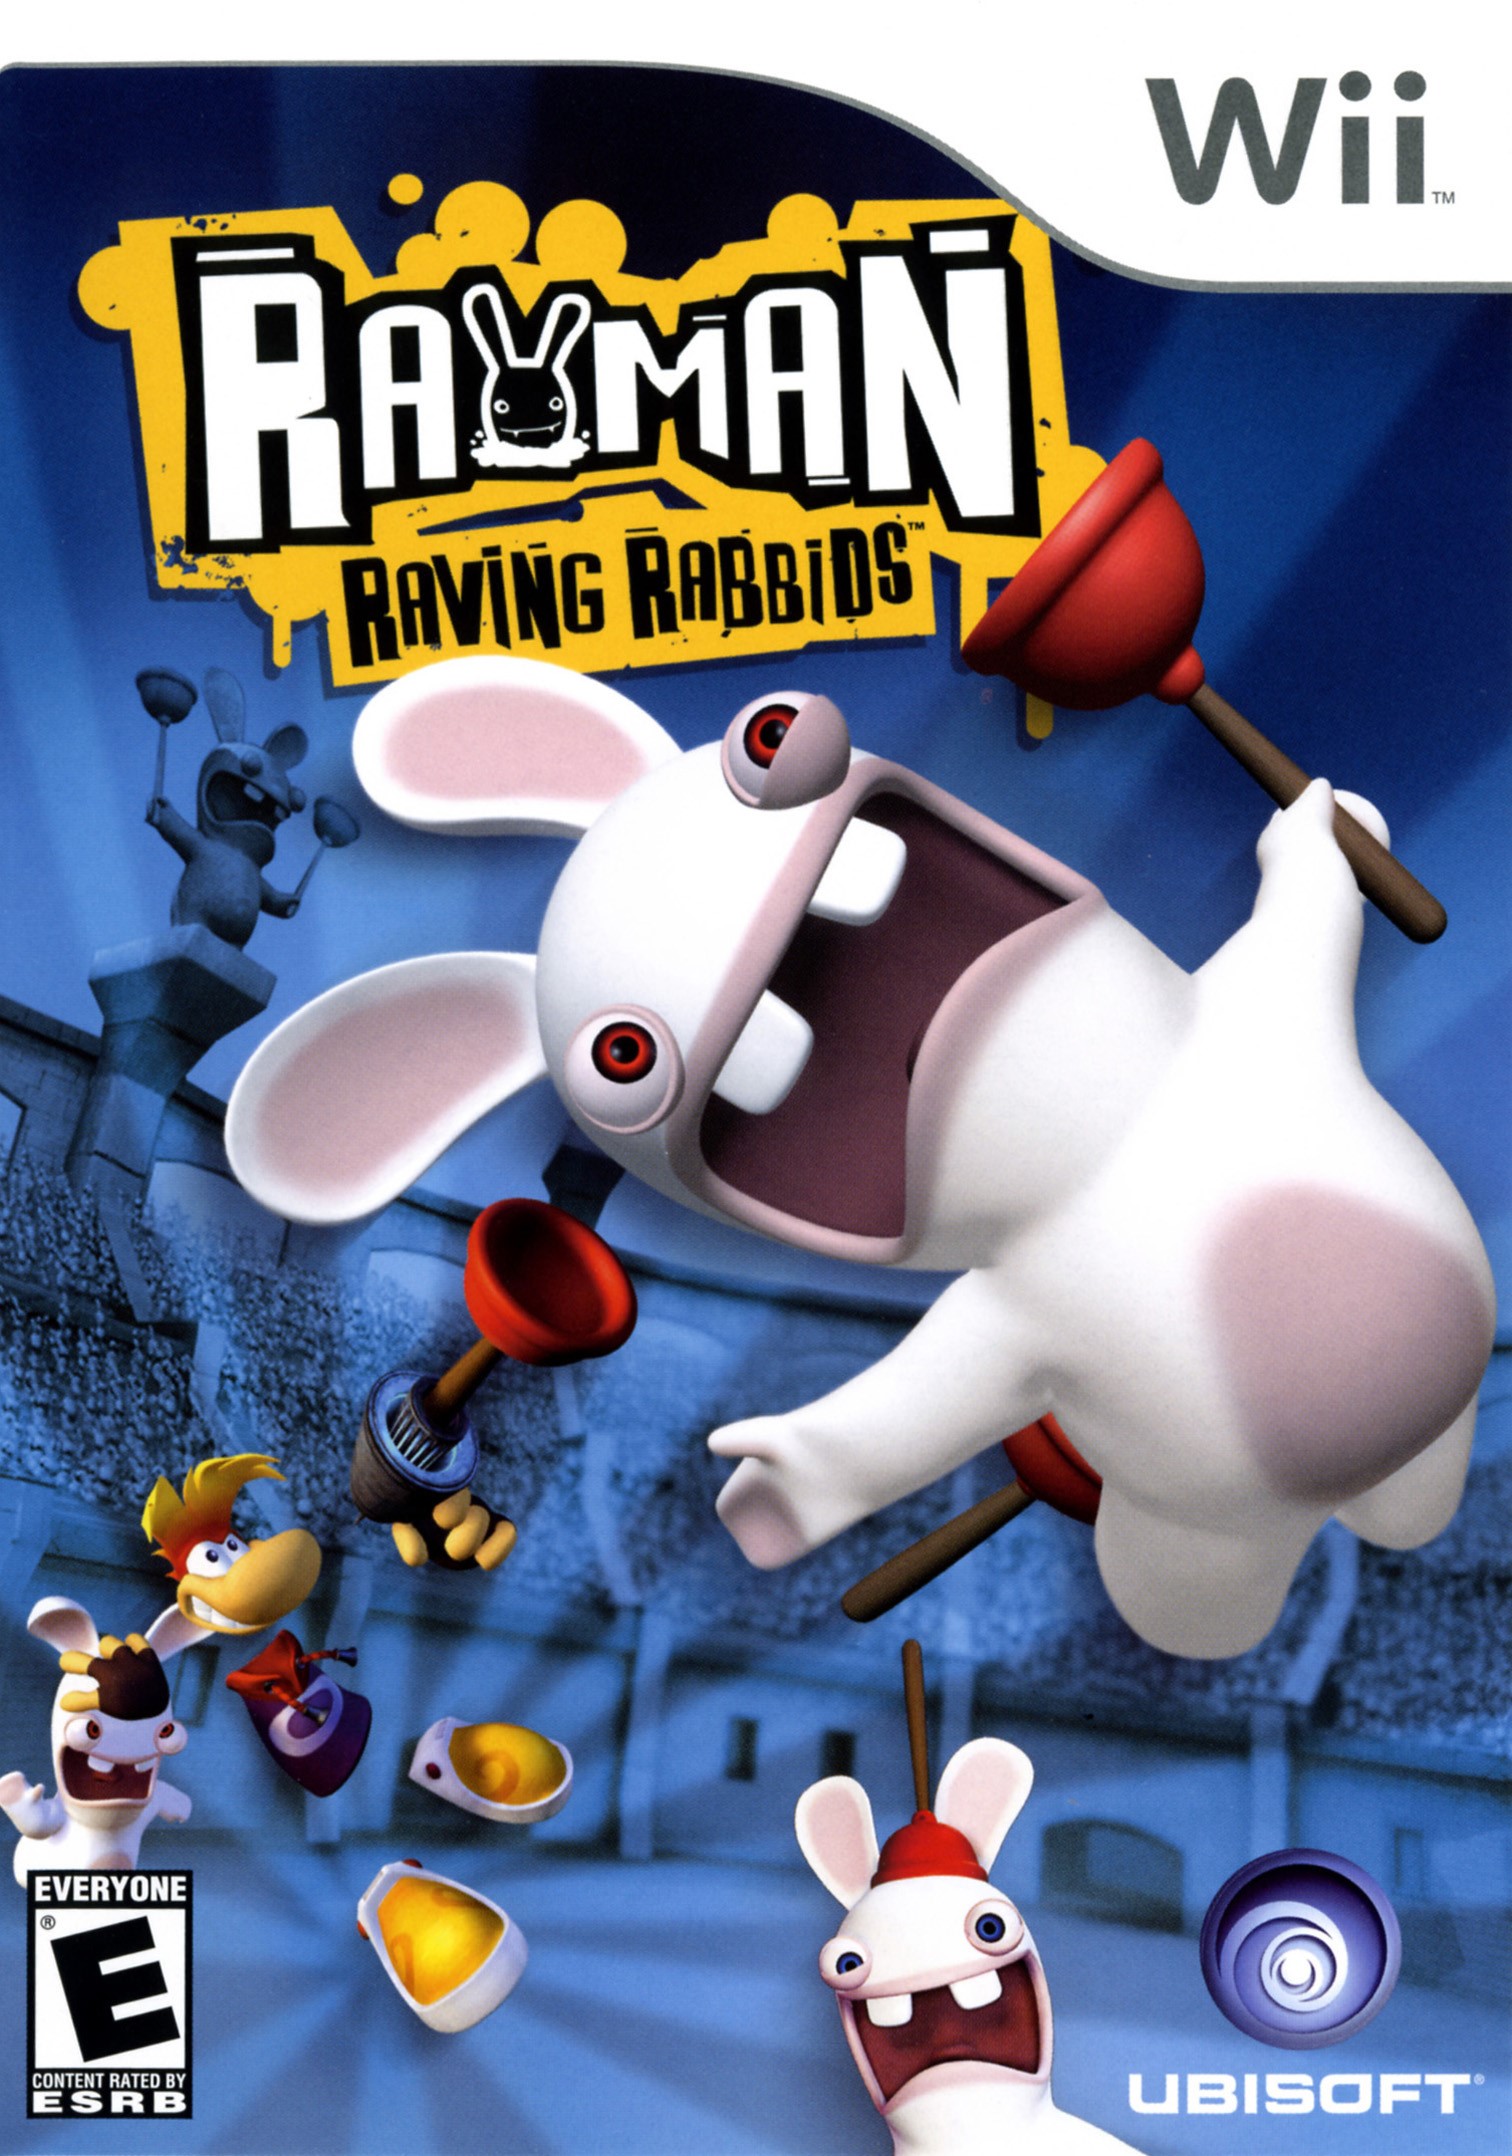 'Rayman: Ravings Rabbids'